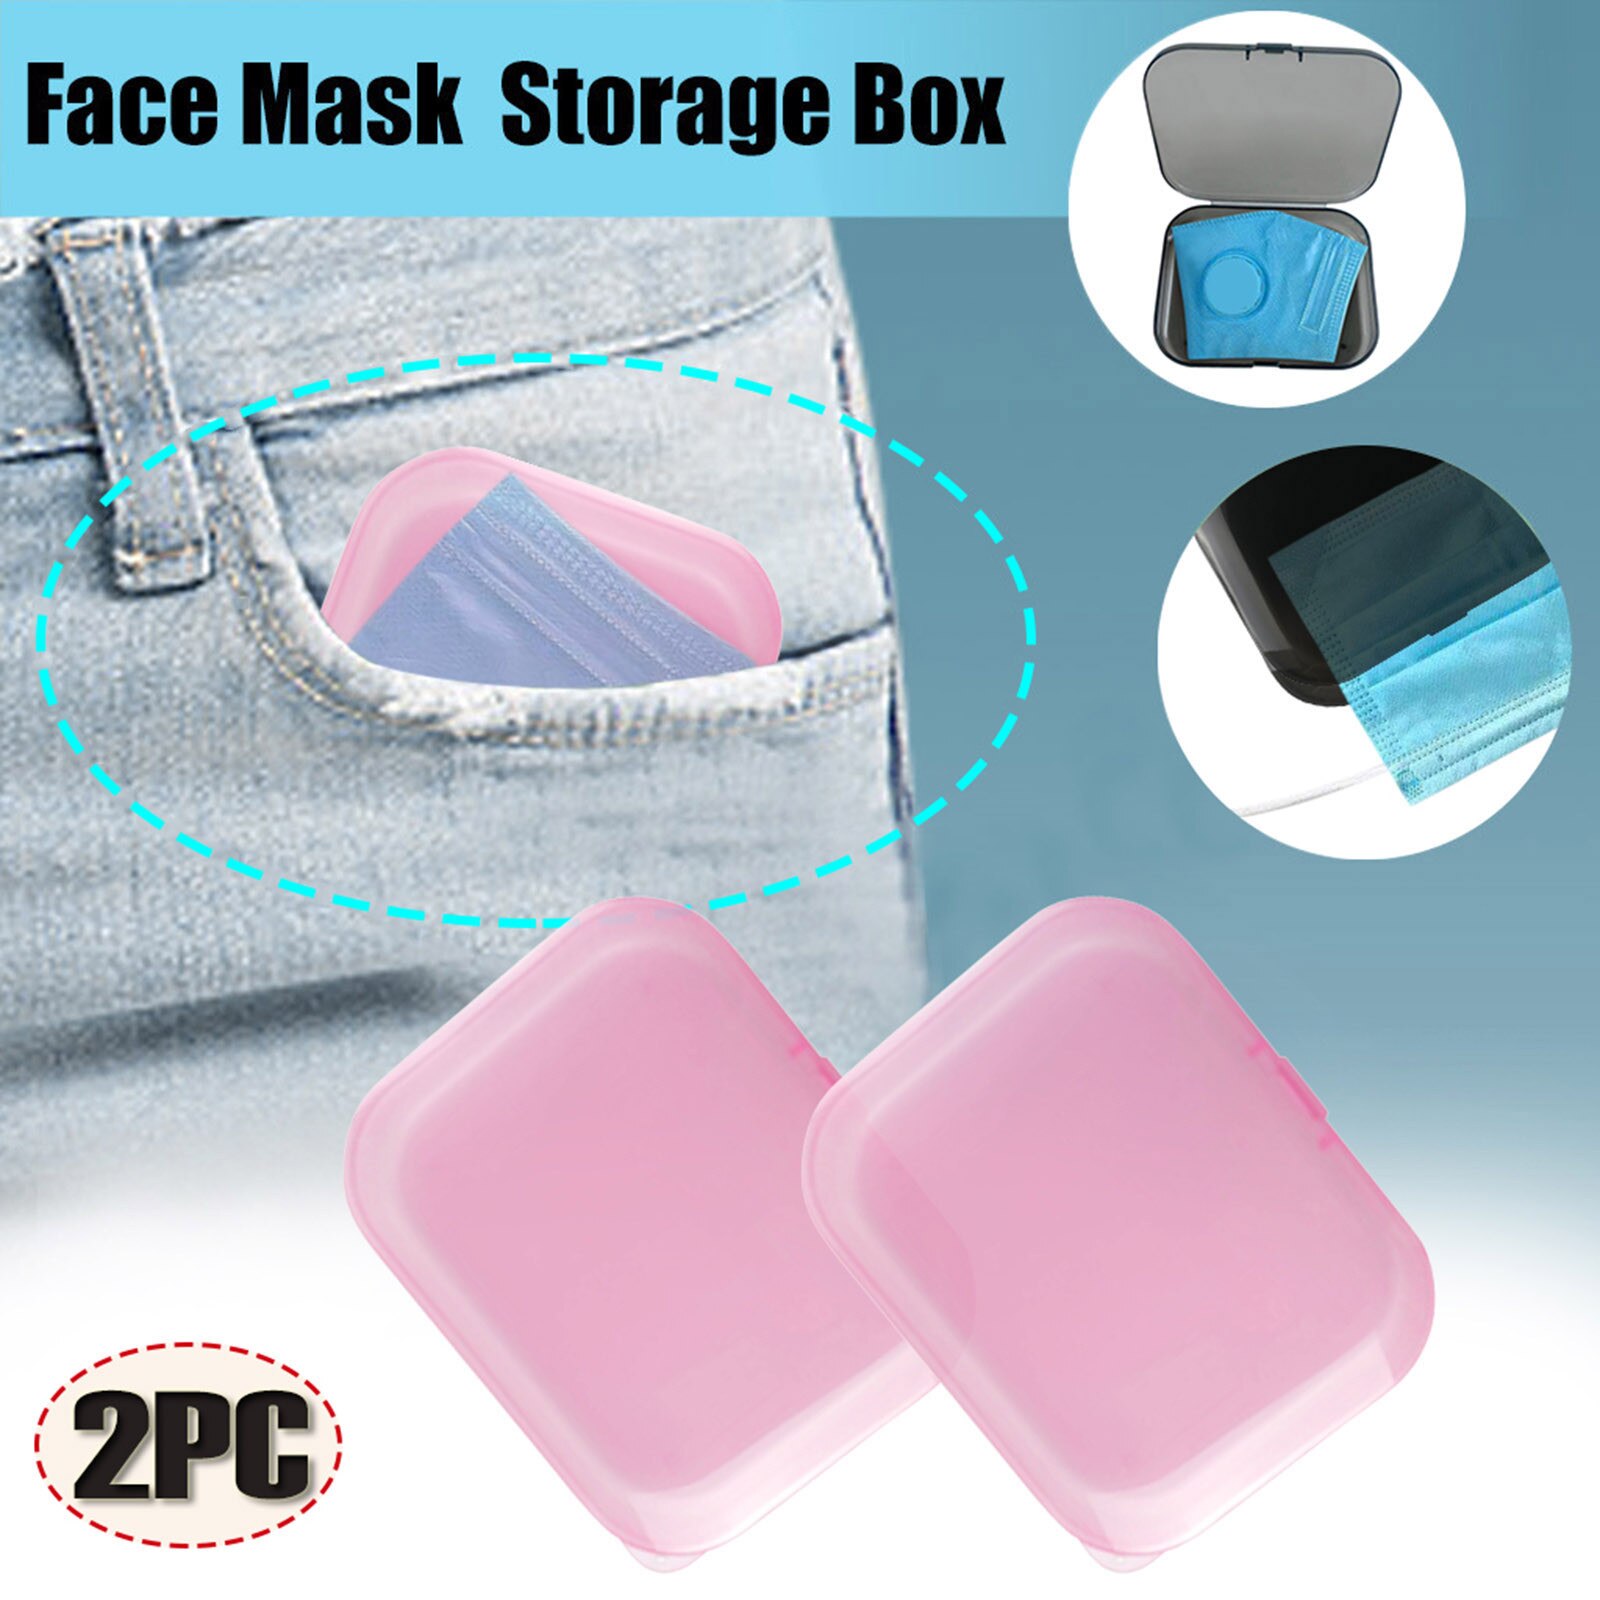 2Pc Roze Gezichtsmasker Opslag Herbruikbare Box Zak Vervuiling Gezichtsmasker Opslag Bakken Houder Masker Case Mond Caps Wasbare mascarillas